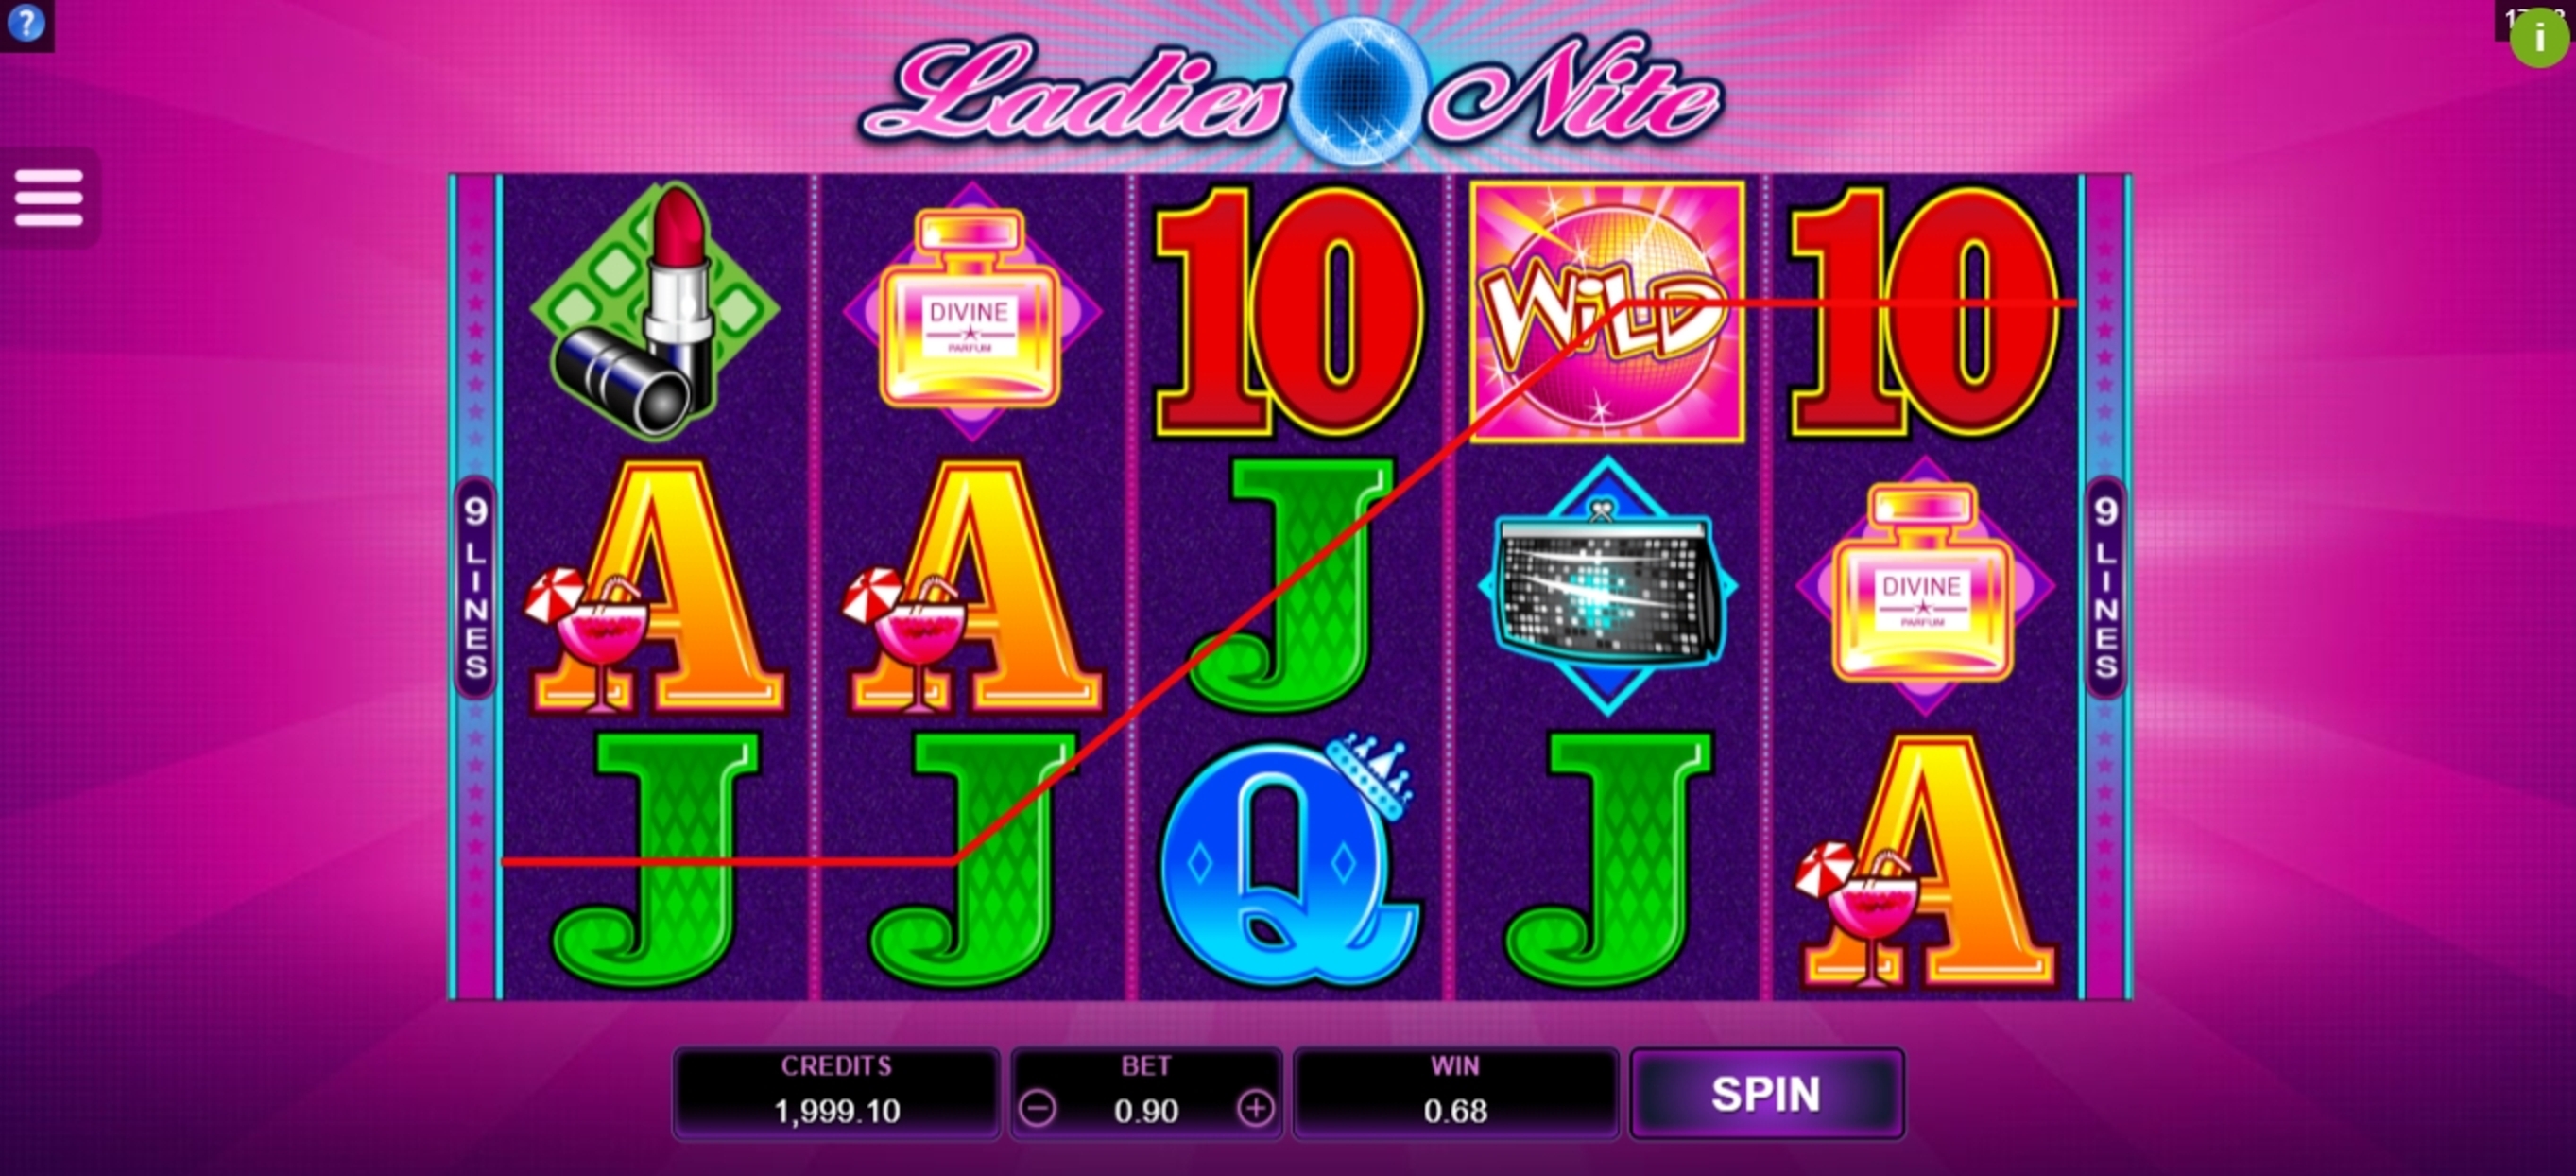 Win Money in Ladies Nite Free Slot Game by Microgaming